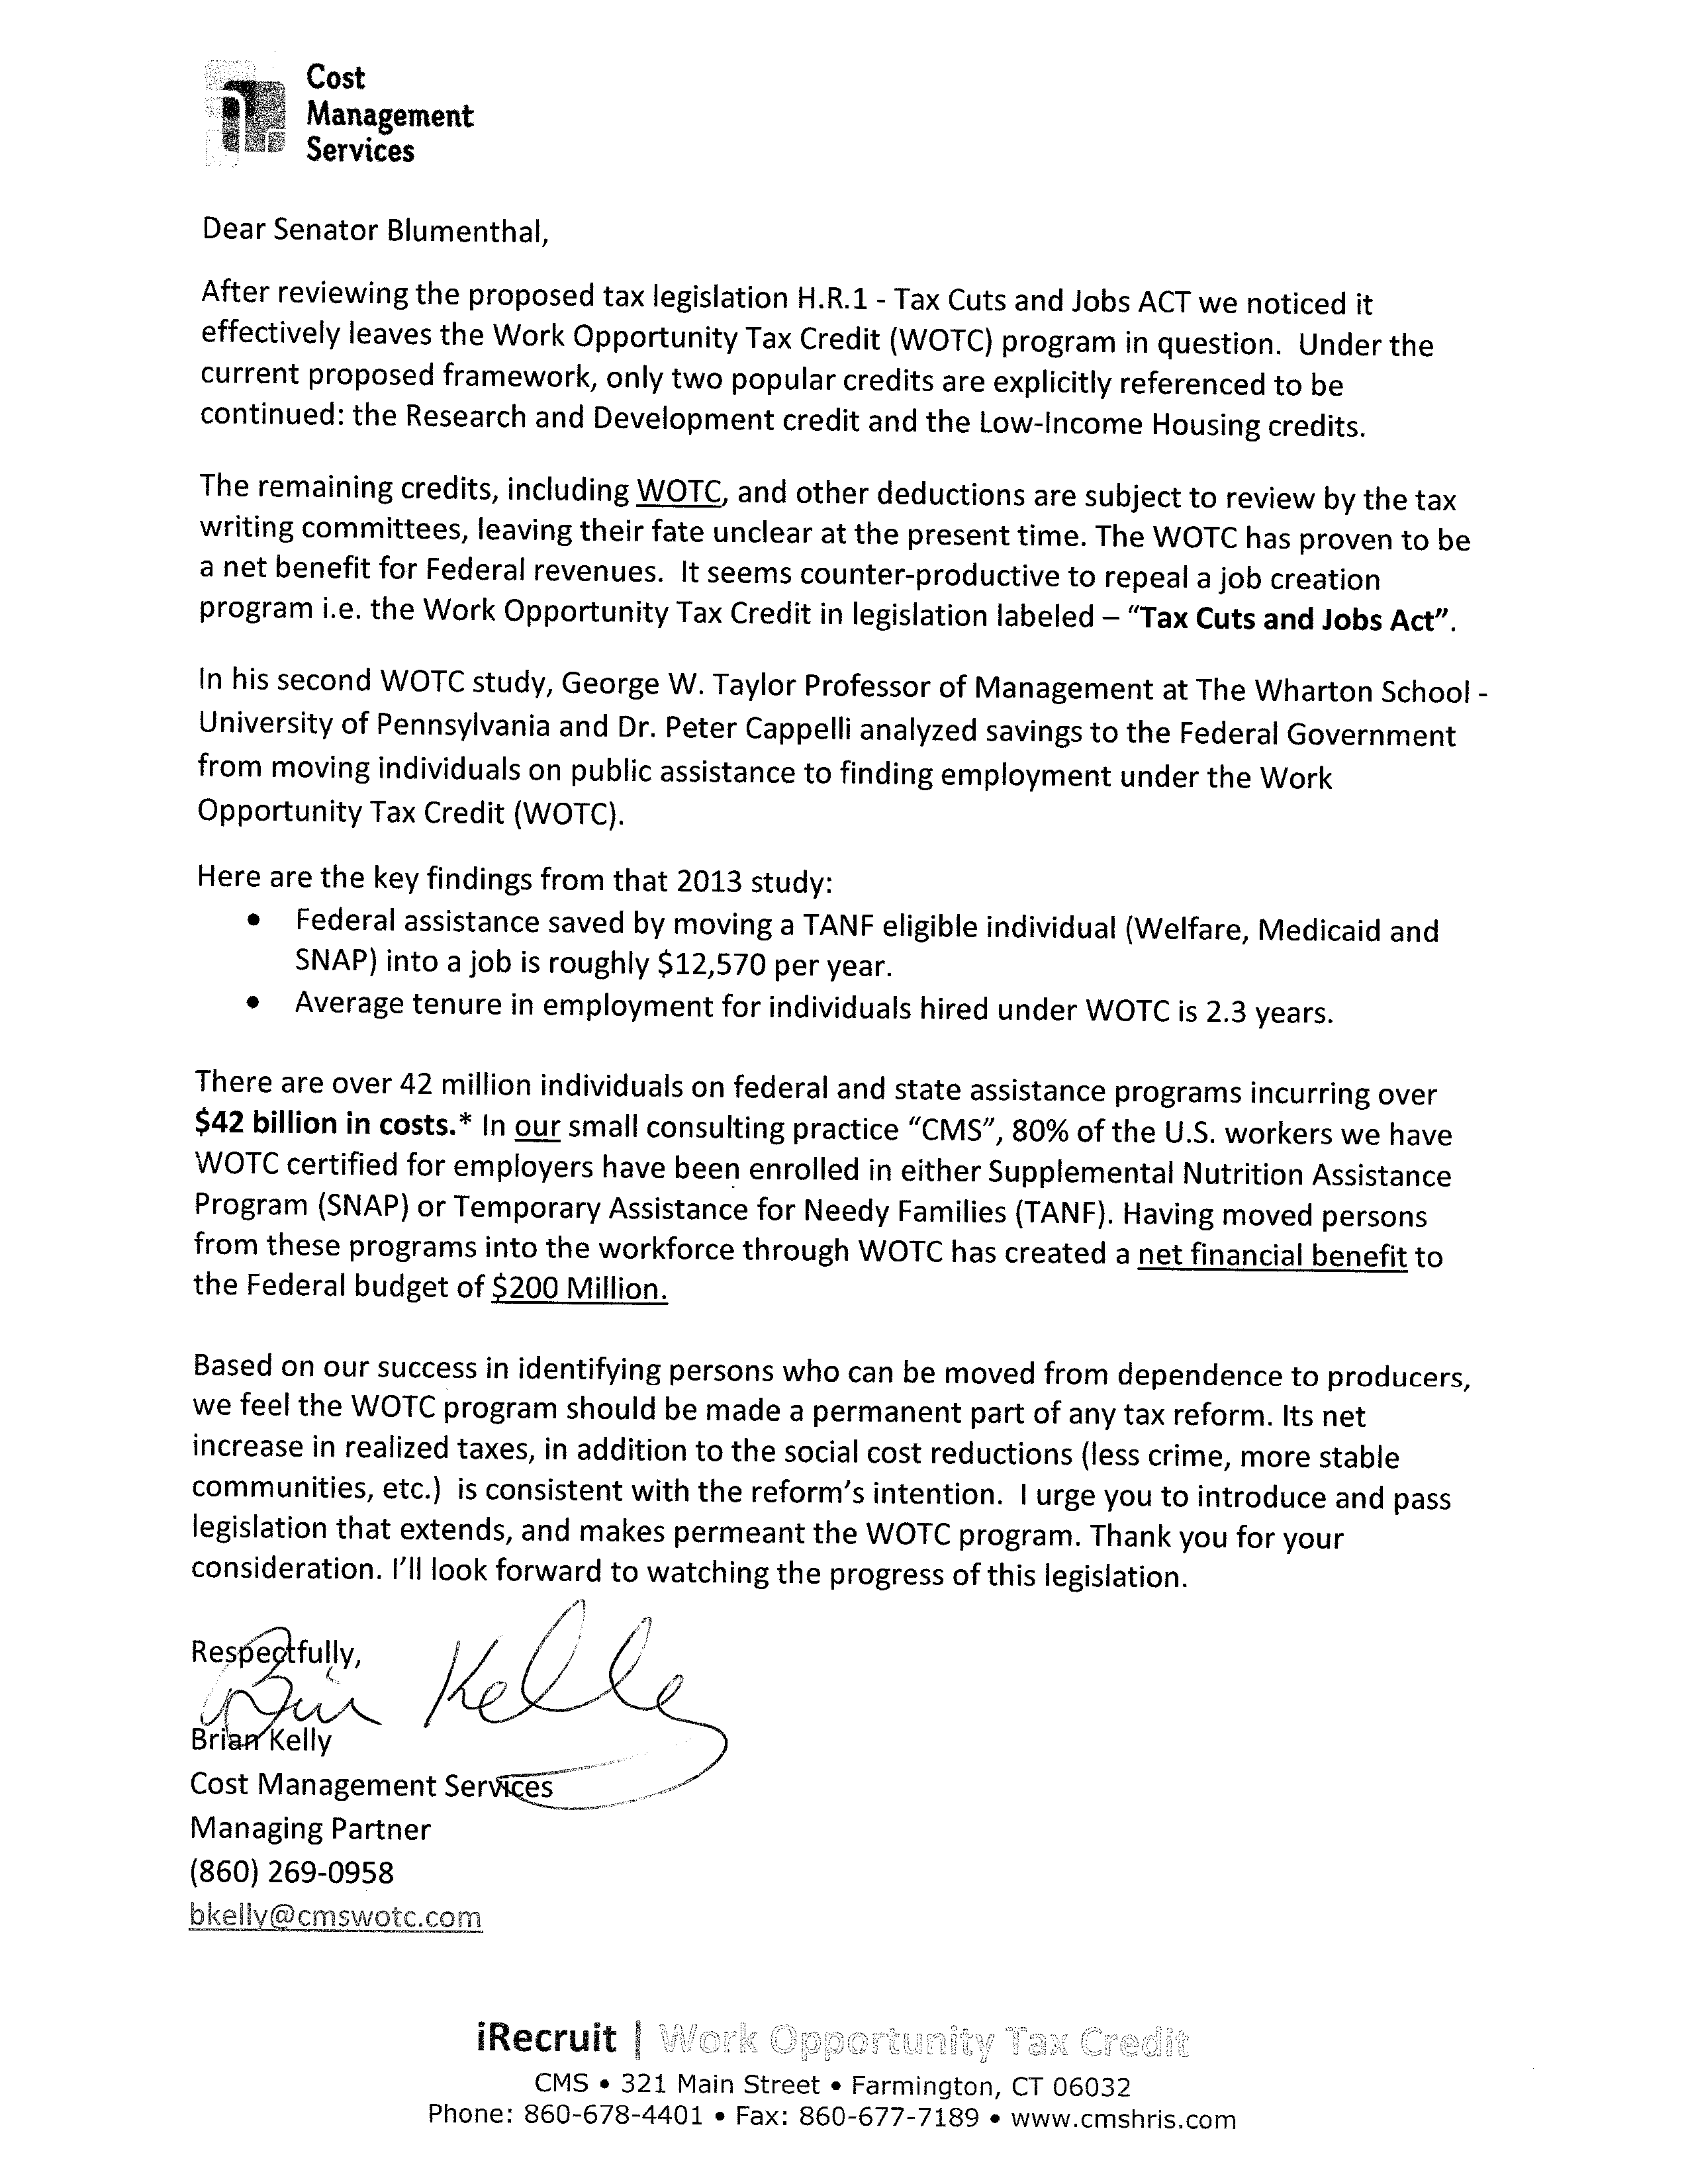 CMS to Senator Blumenthal - HR 1 WOTC Letter